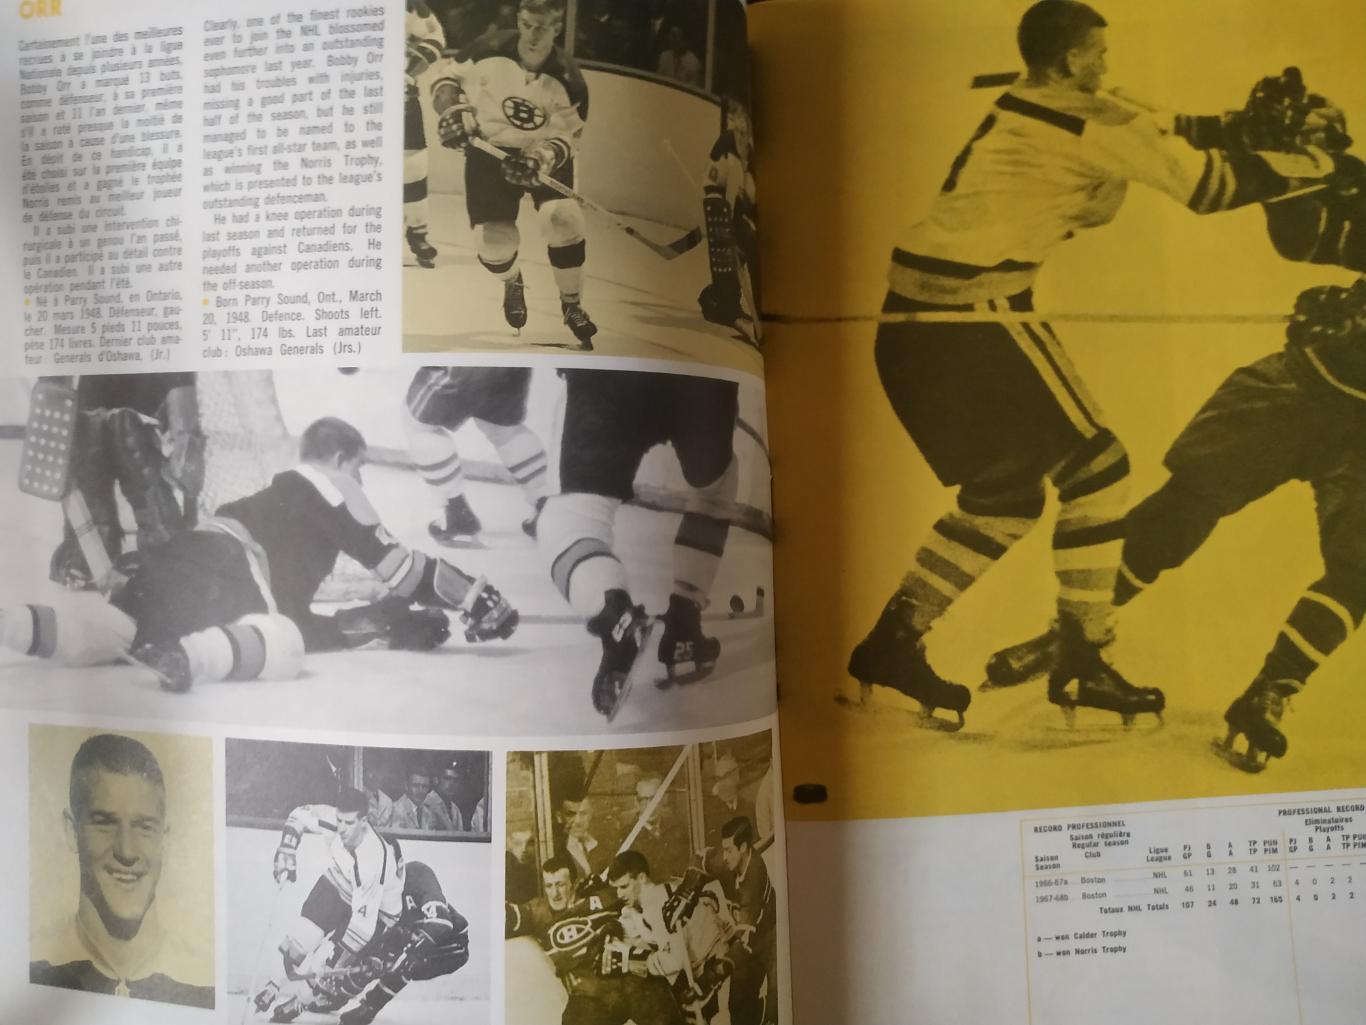 ПРОГРАММА МАТЧА НХЛ БОСТОН NHL 1968 NOV.06 PITTSBURG VS. CANADIENS PROGRAM GAME 2